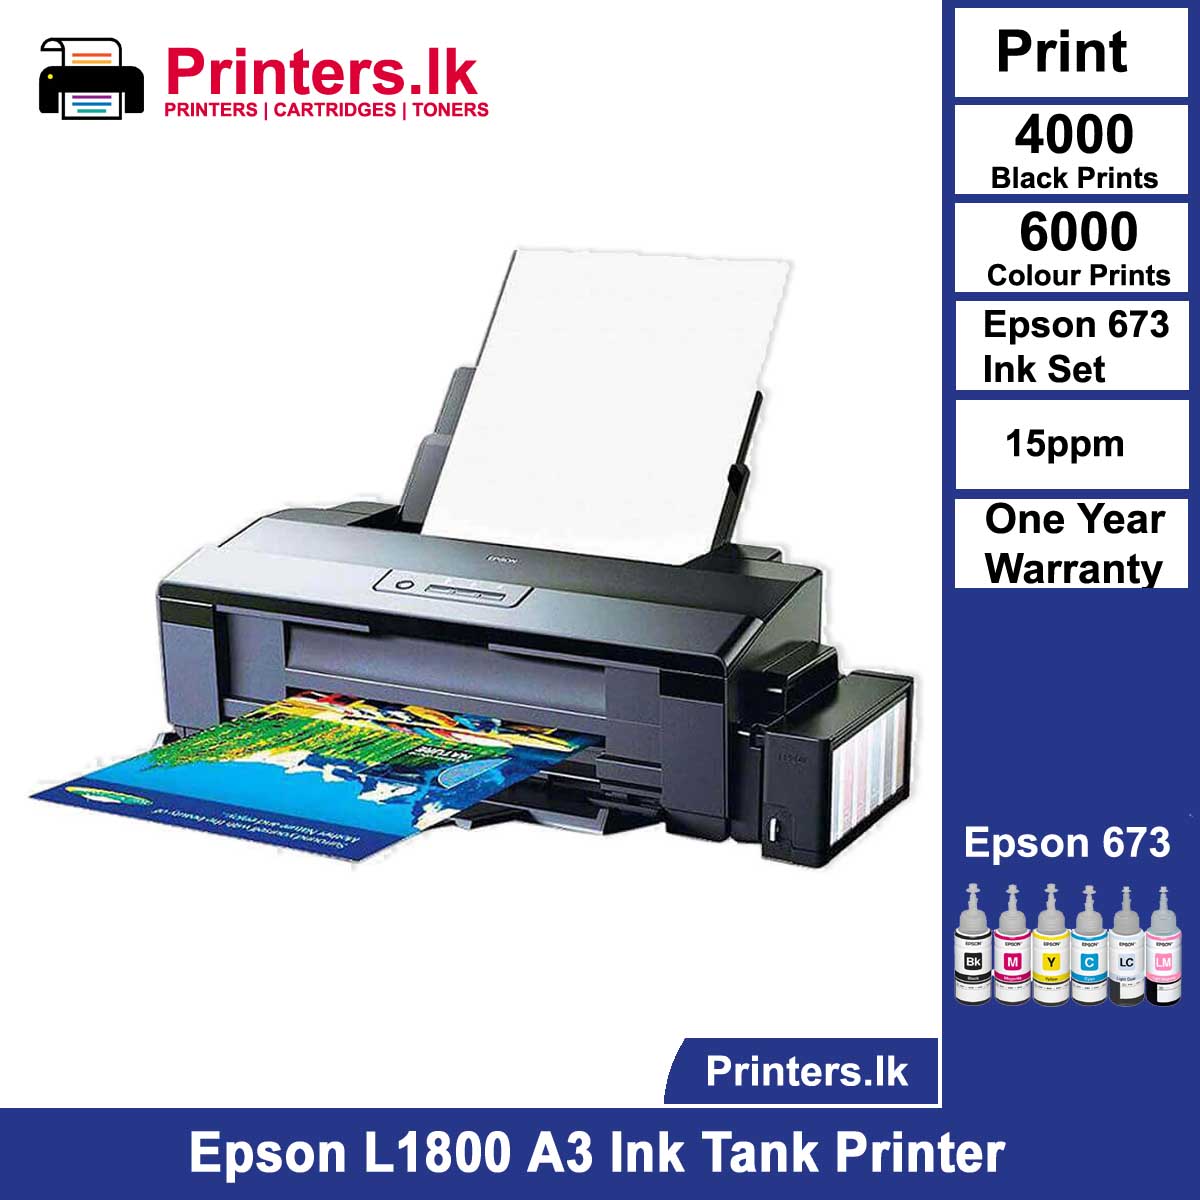 Epson L1800 A3 Printer A3 Borderless Photo Printing Best Price Printerslk Pvt Ltd 7681